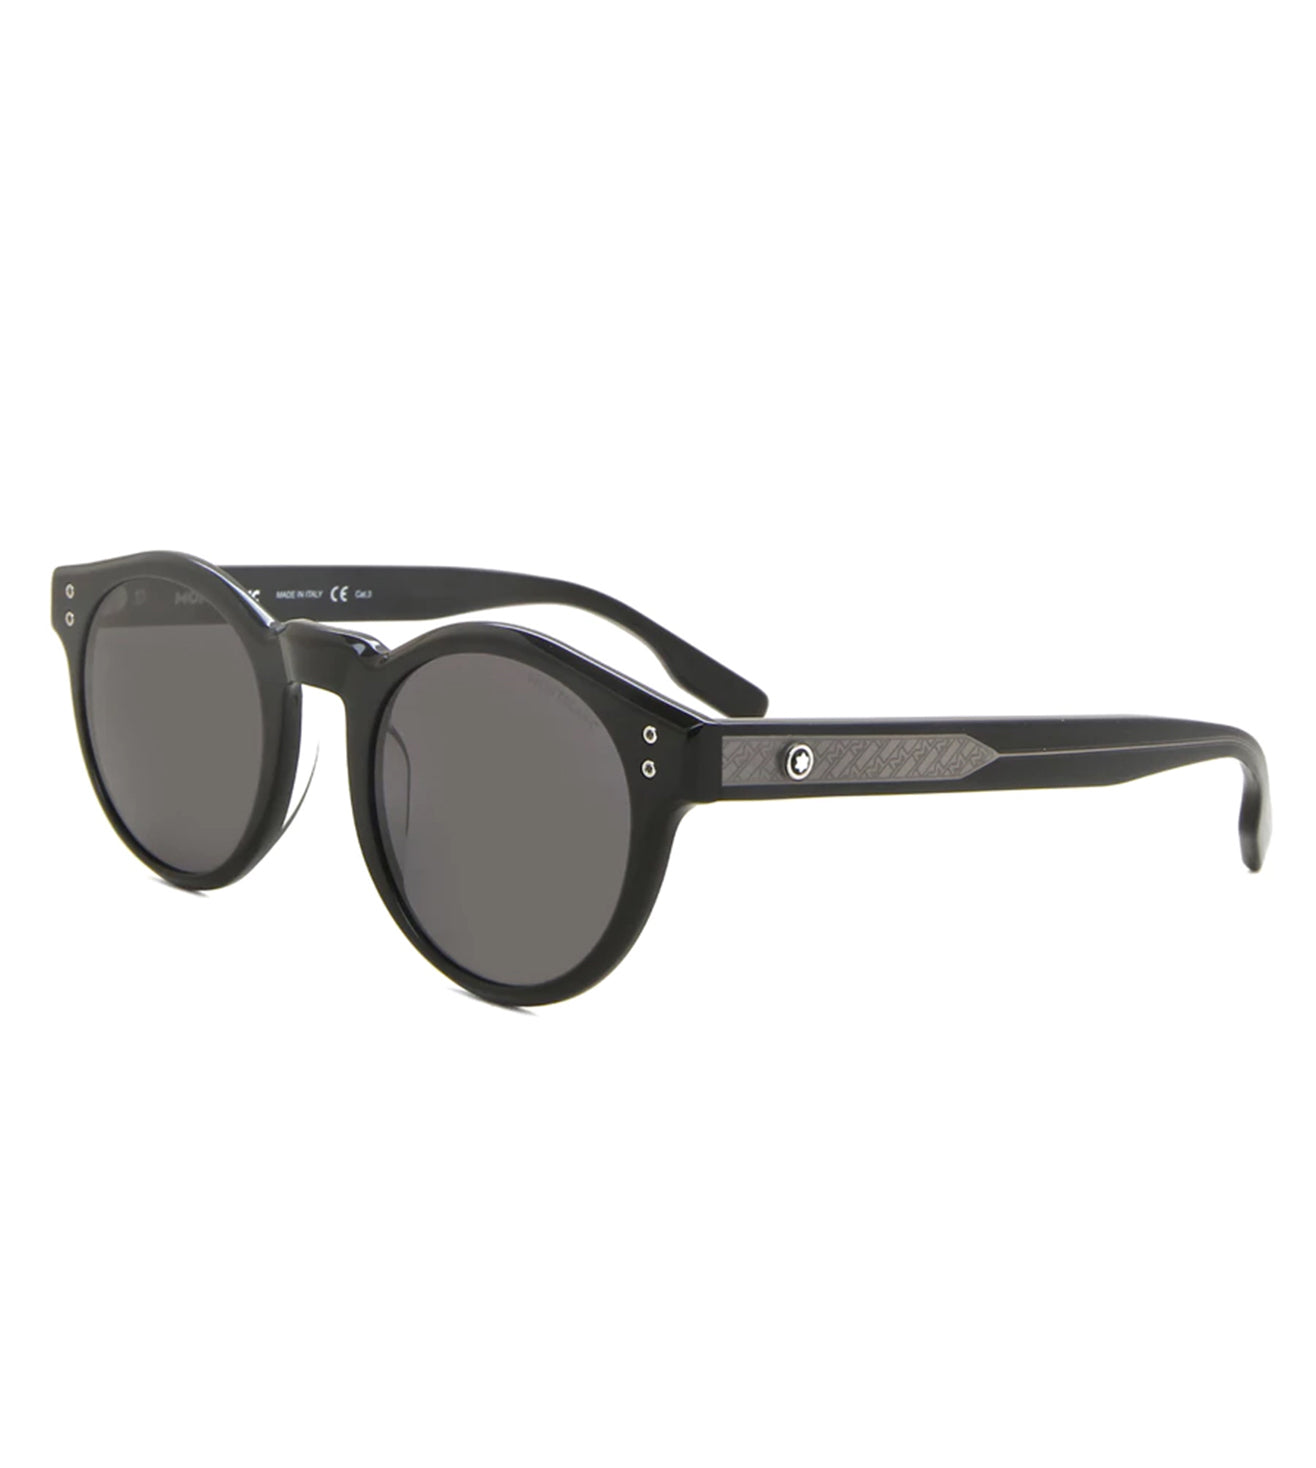 Montblanc Men's Grey Round Sunglasses